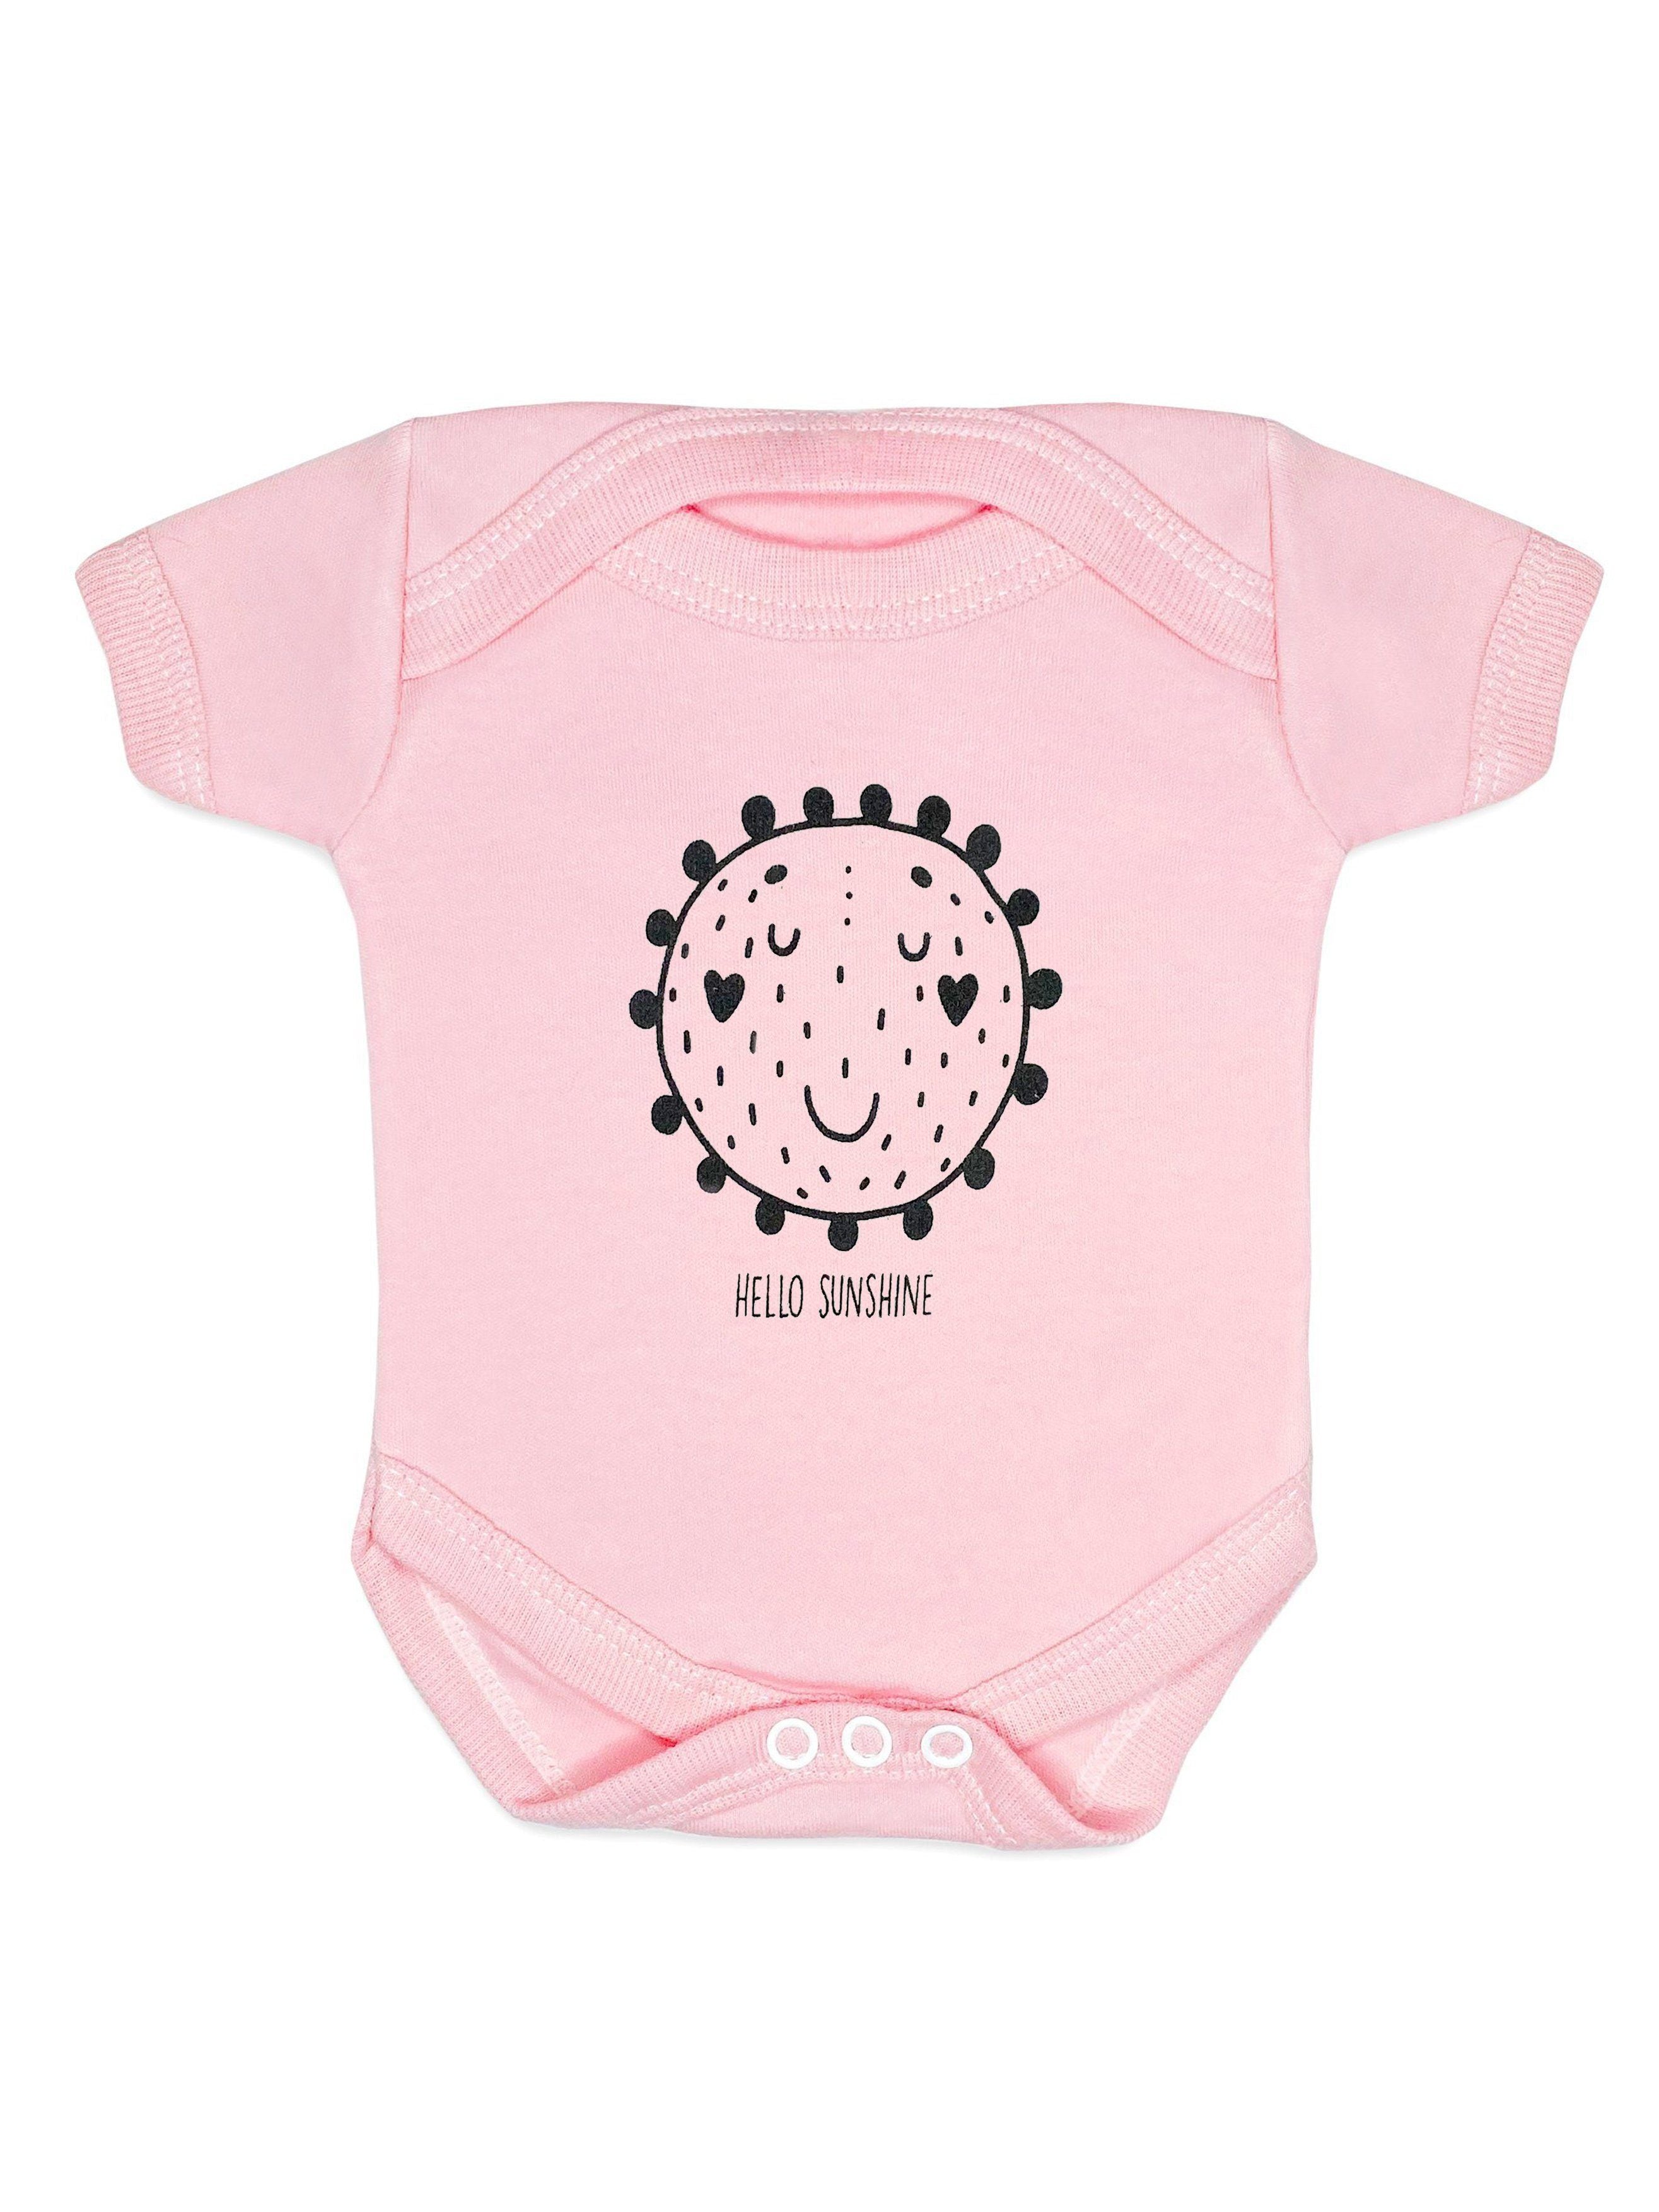 "Hello Sunshine" Bodysuit - Pink Bodysuit / Vest Little Mouse Baby Clothing & Gifts 